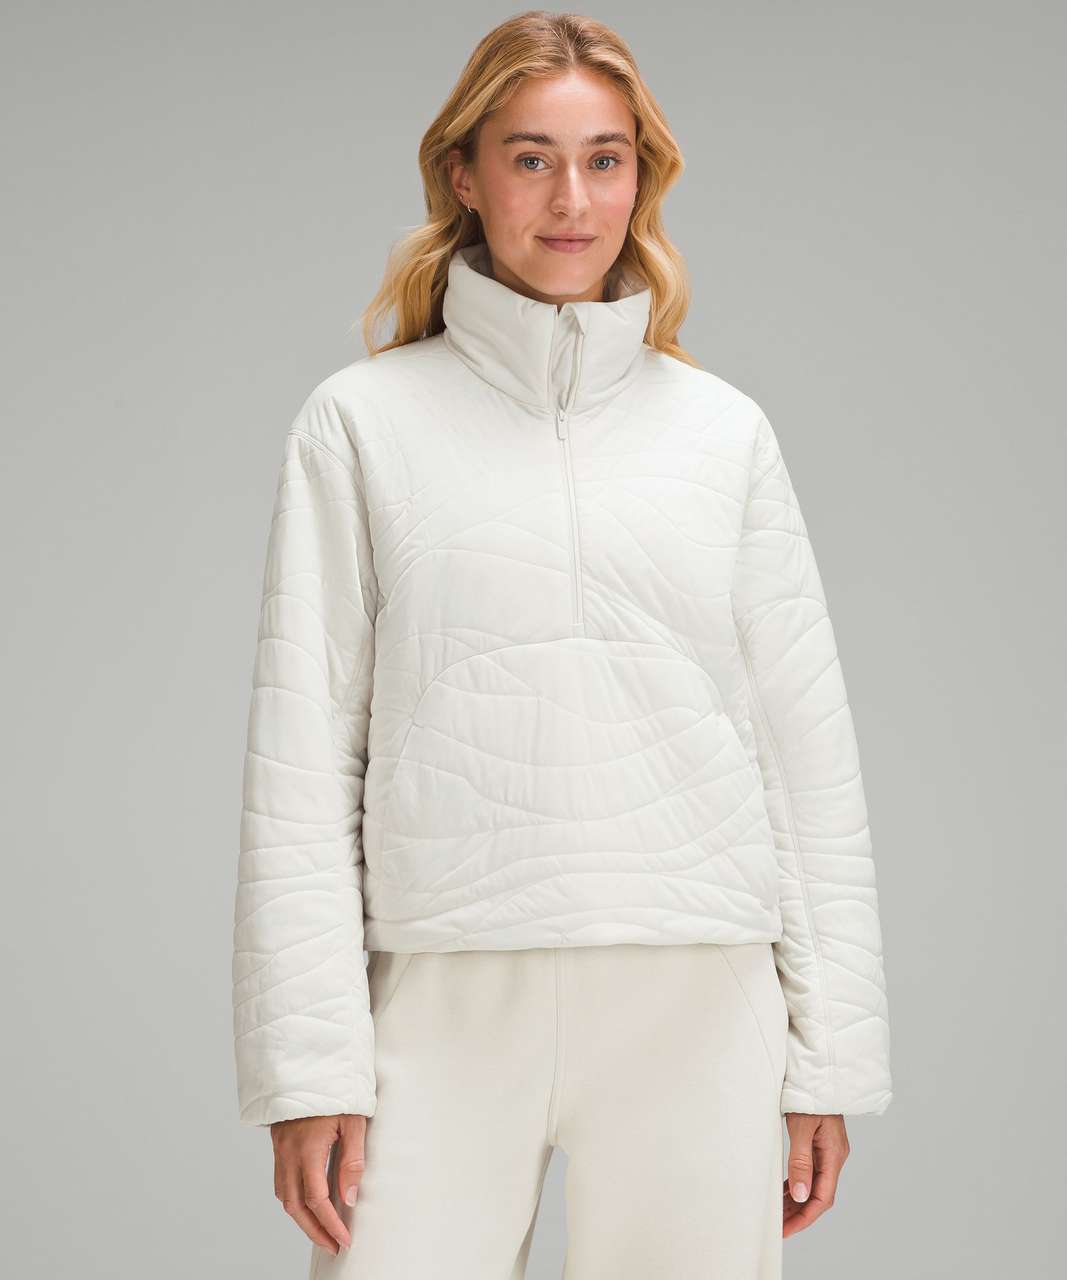 LuLuLemon White Half Zip Active Hoodie Pullover Long Sleeve Shirt Women  Size 12